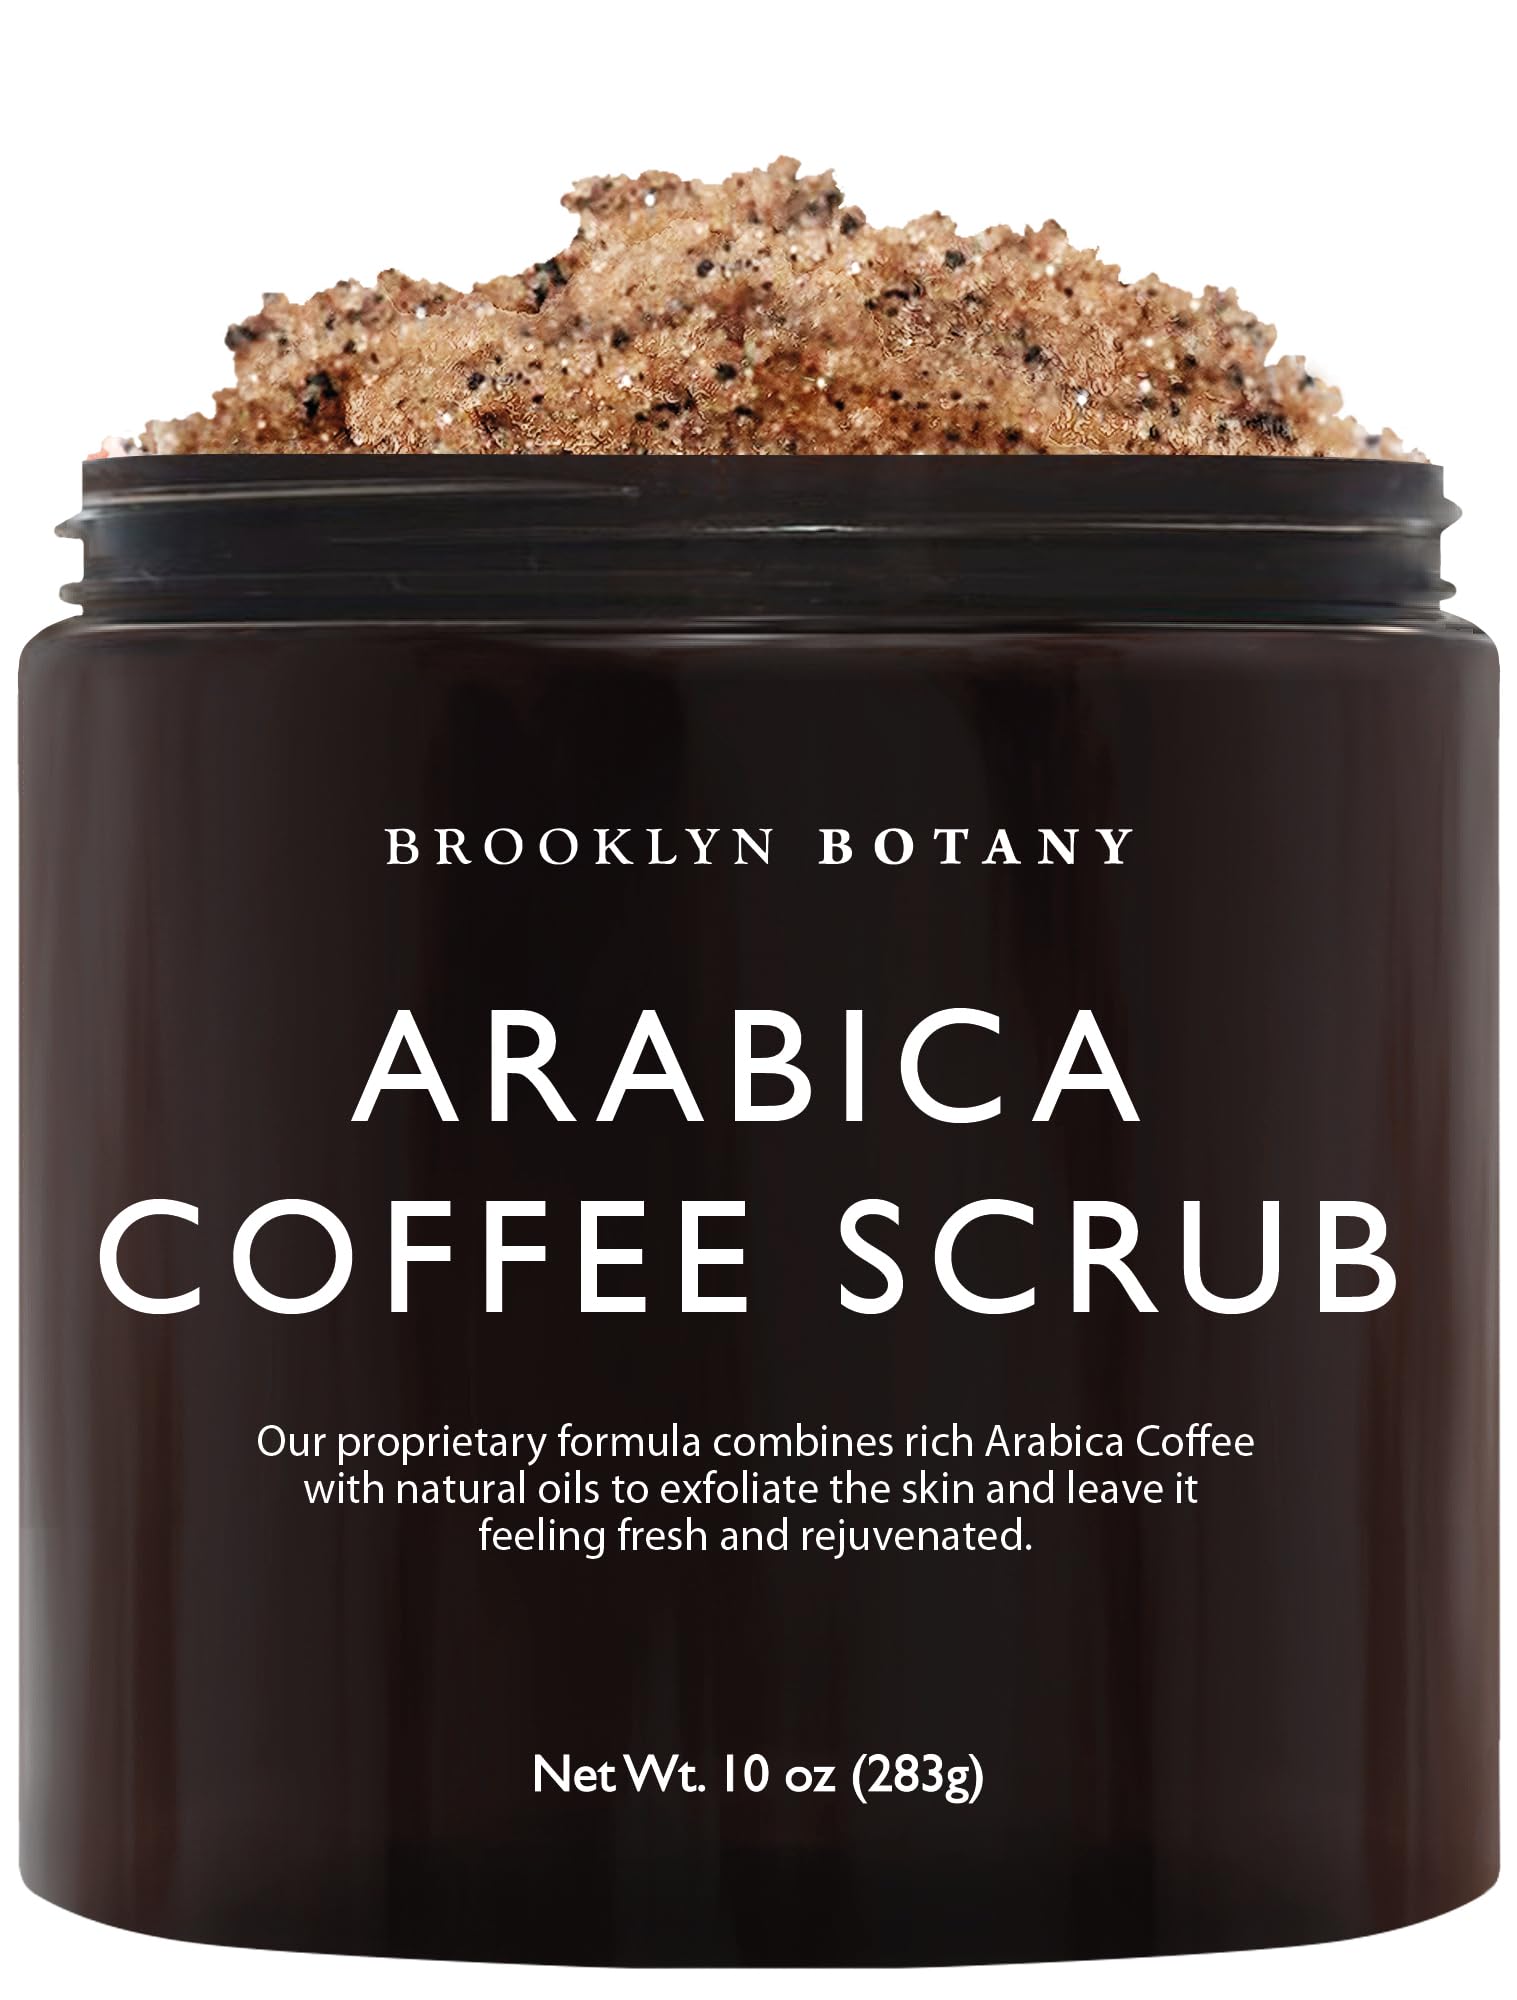 Brooklyn Botany Dead Sea Salt and Arabica Coffee Body Scrub - Moisturizing and Exfoliating Body, Face, Hand, Foot Scrub - Fights Stretch Marks, Fine Lines, Wrinkles - Great Gifts for Women & Men - 10 oz